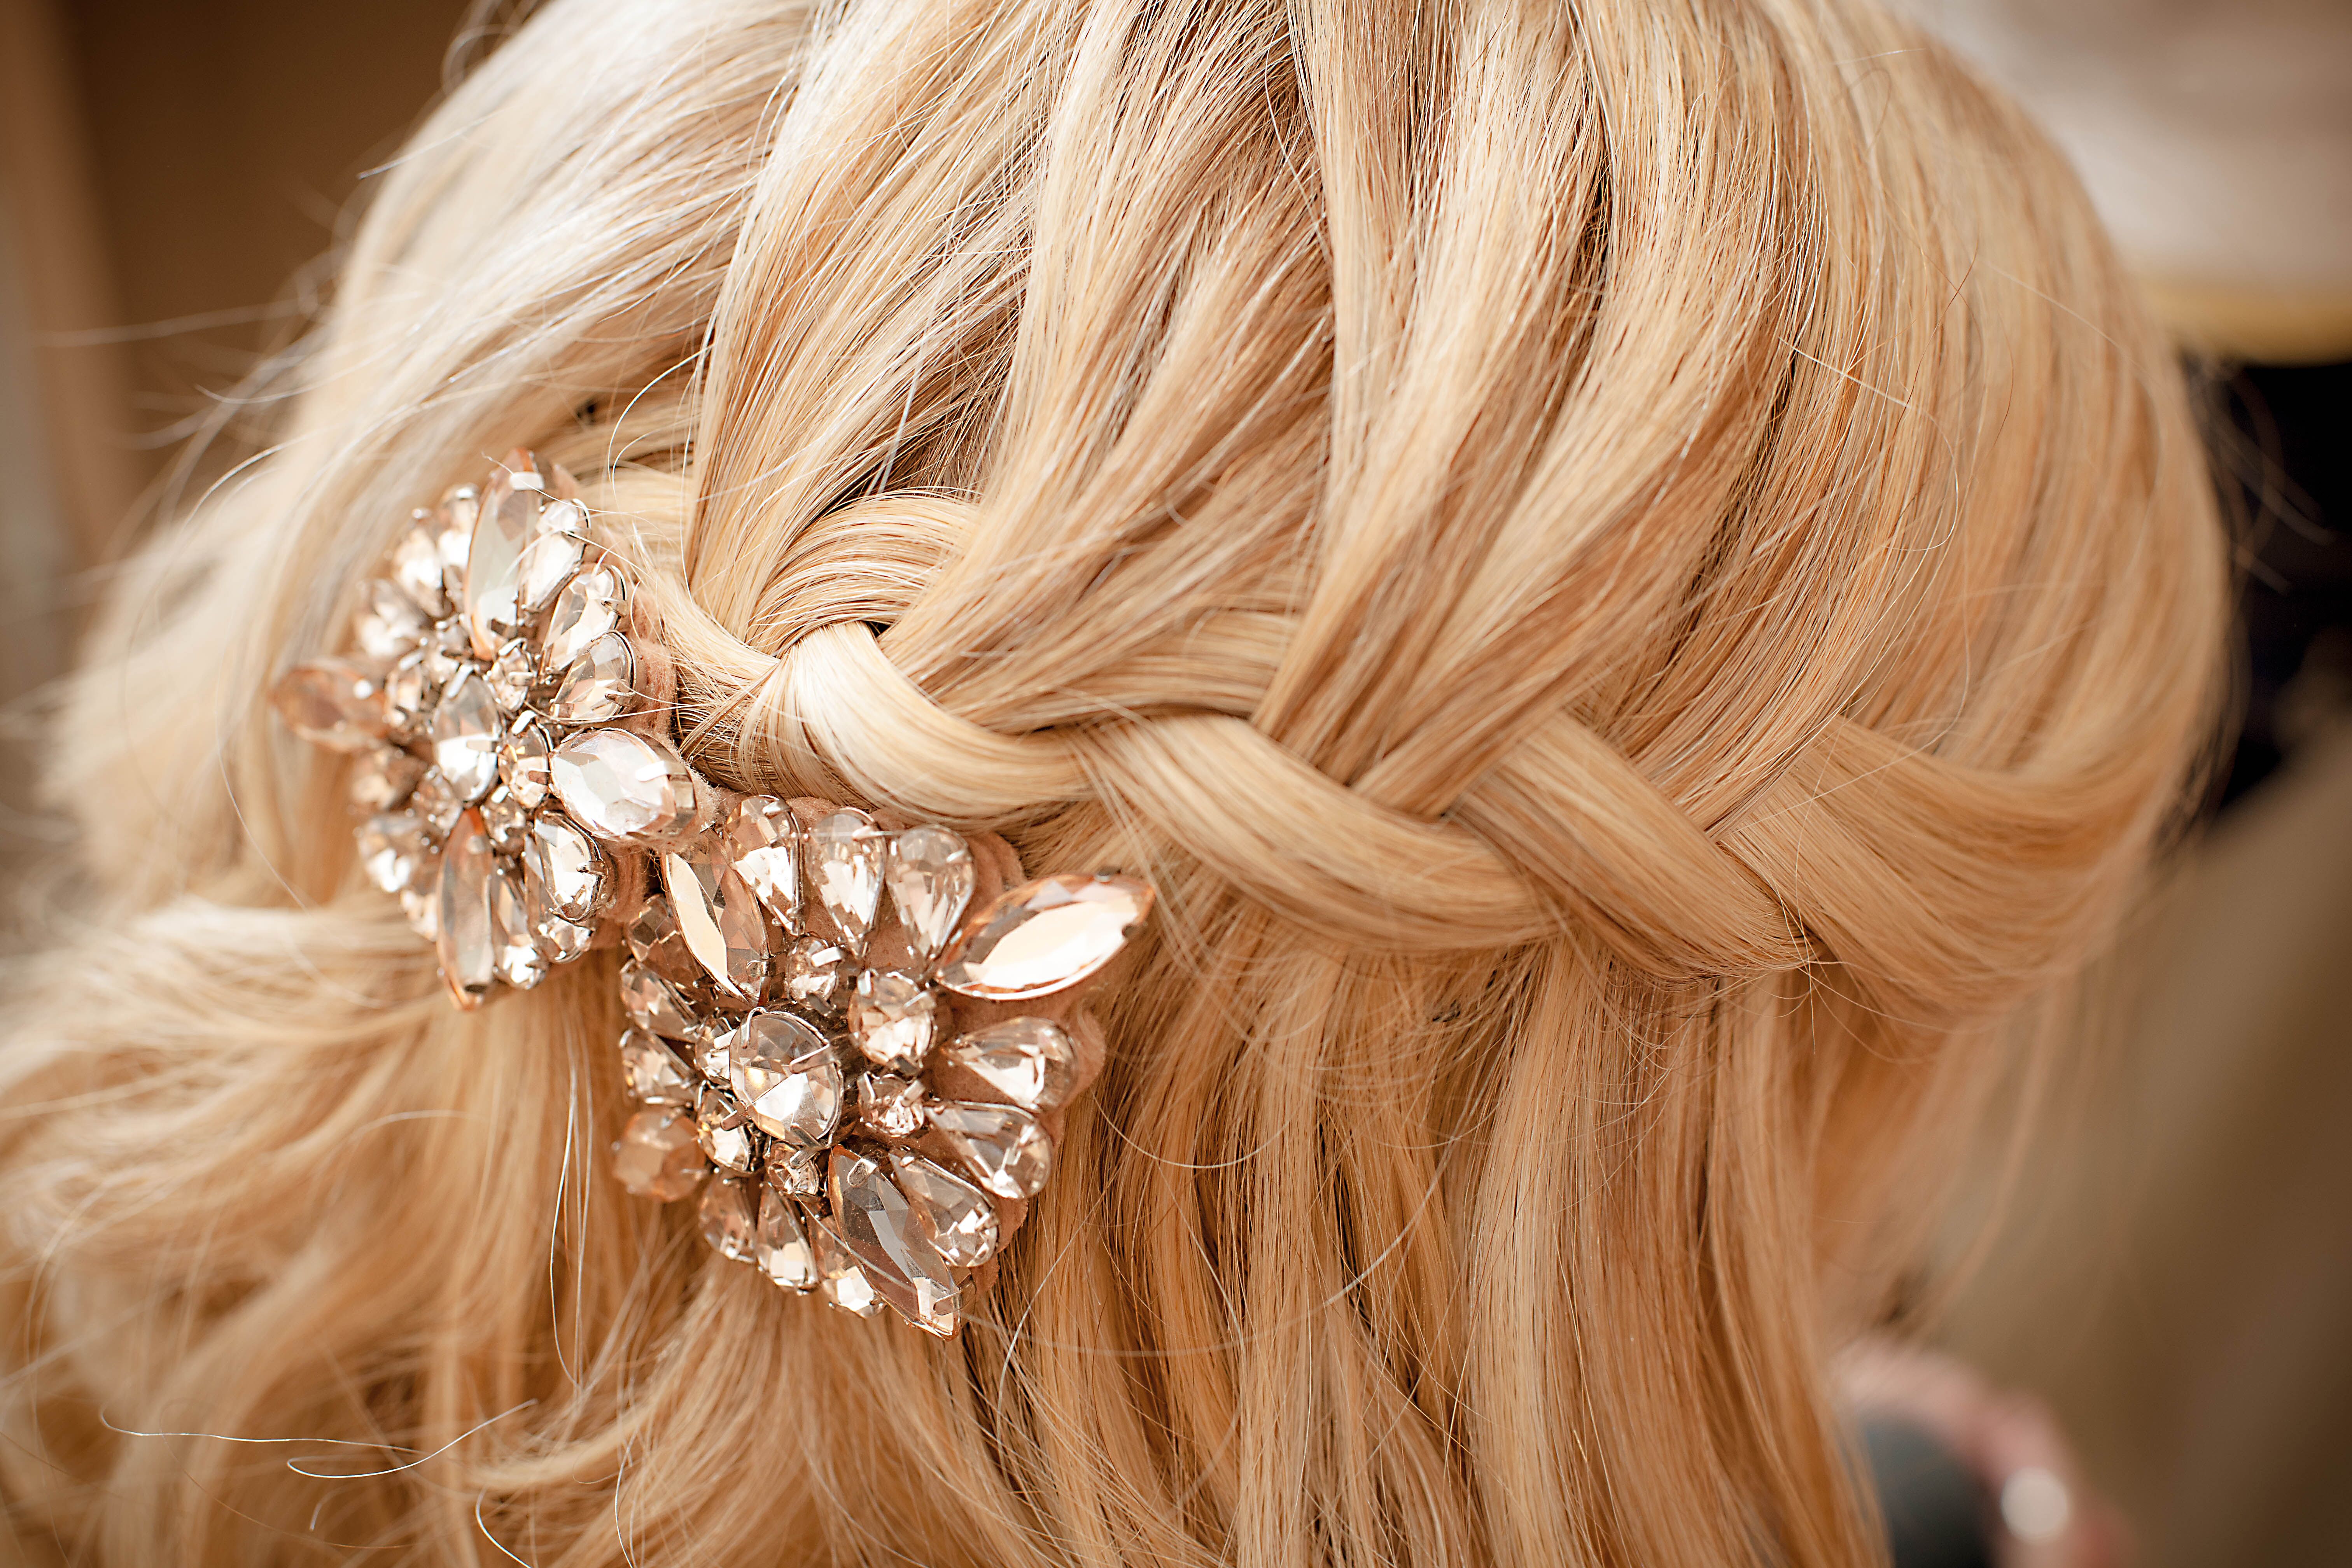 3. Braided wedding hairstyles - wide 9